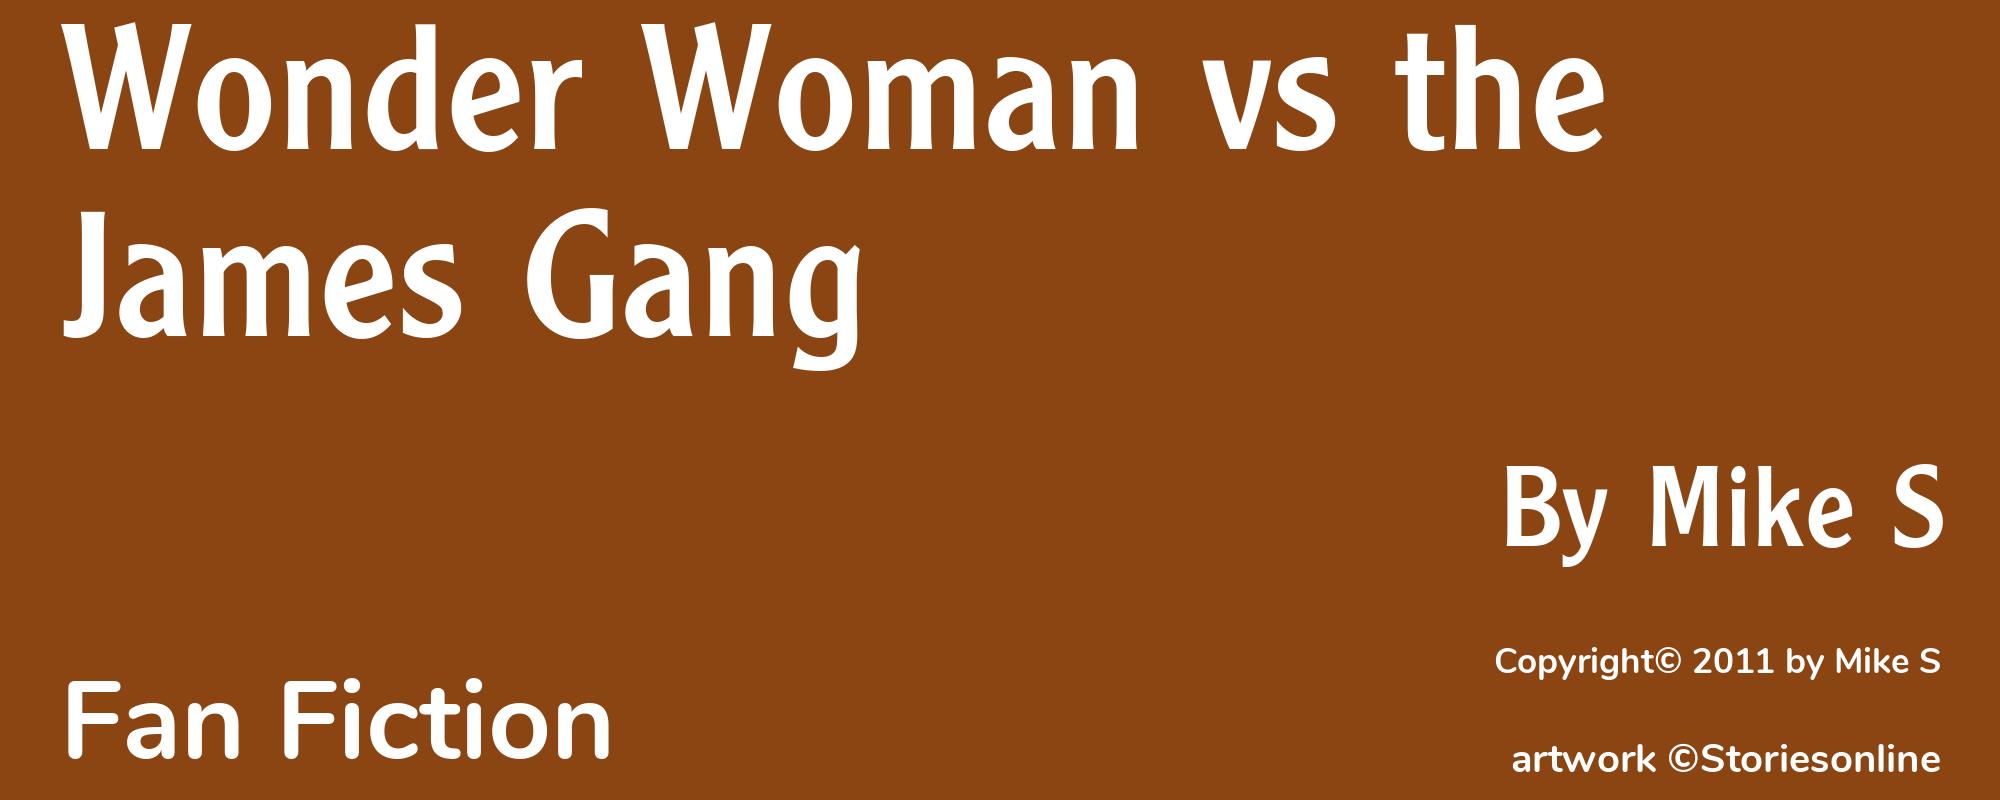 Wonder Woman vs the James Gang - Cover